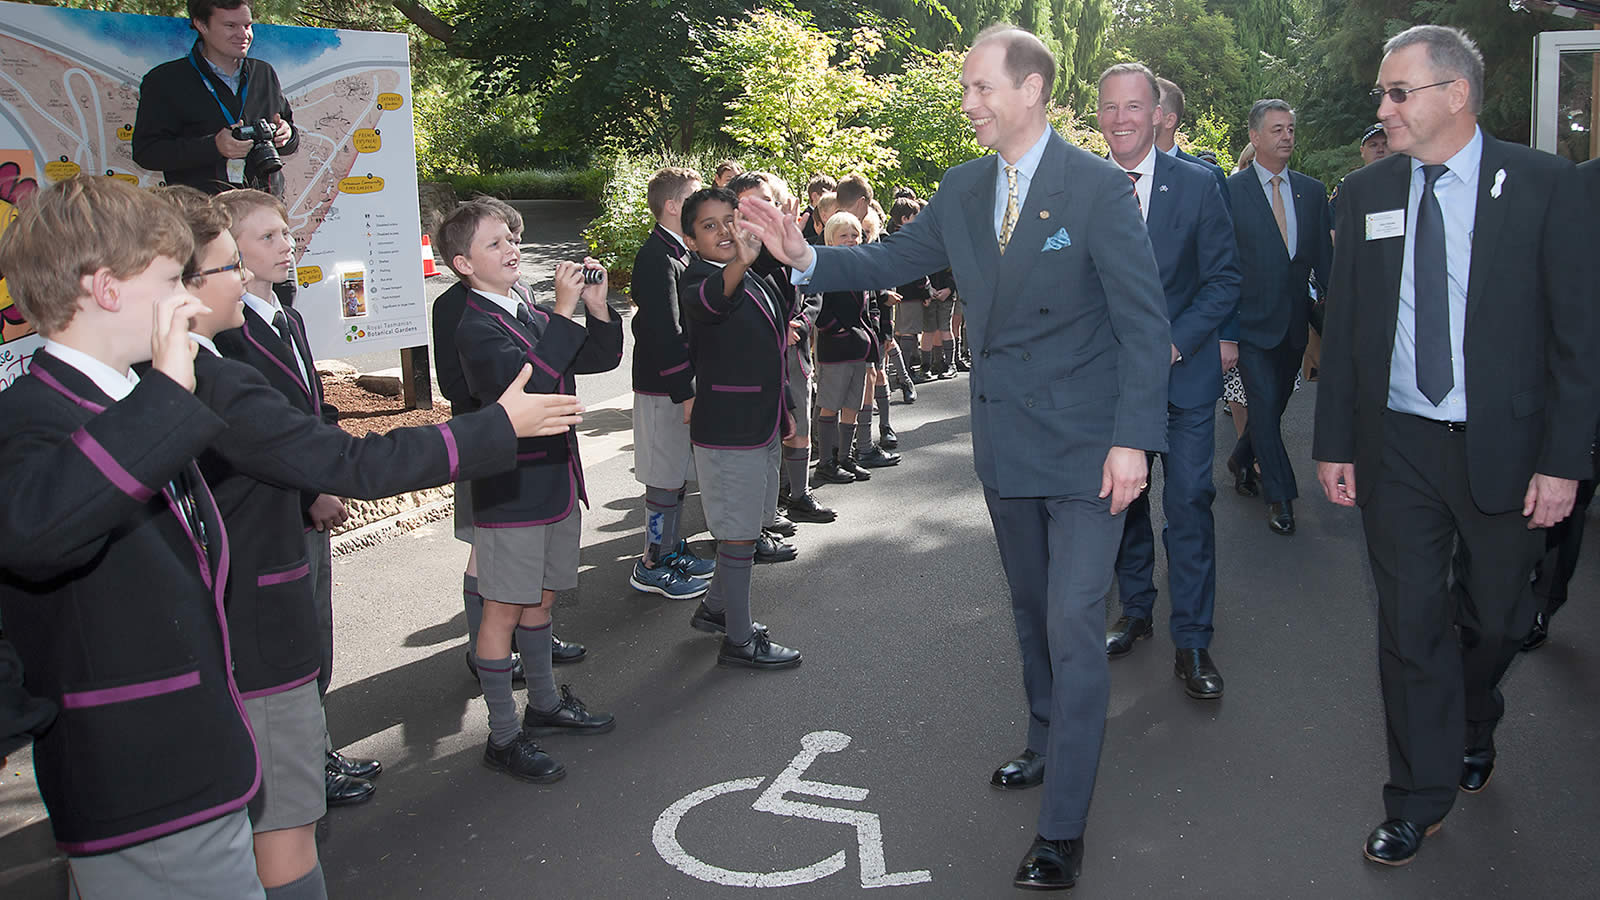 His Royal Highness, The Prince Edward, Earl of Wessex greets Hutchins students at the Tasmanian Royal Botanical Gardens